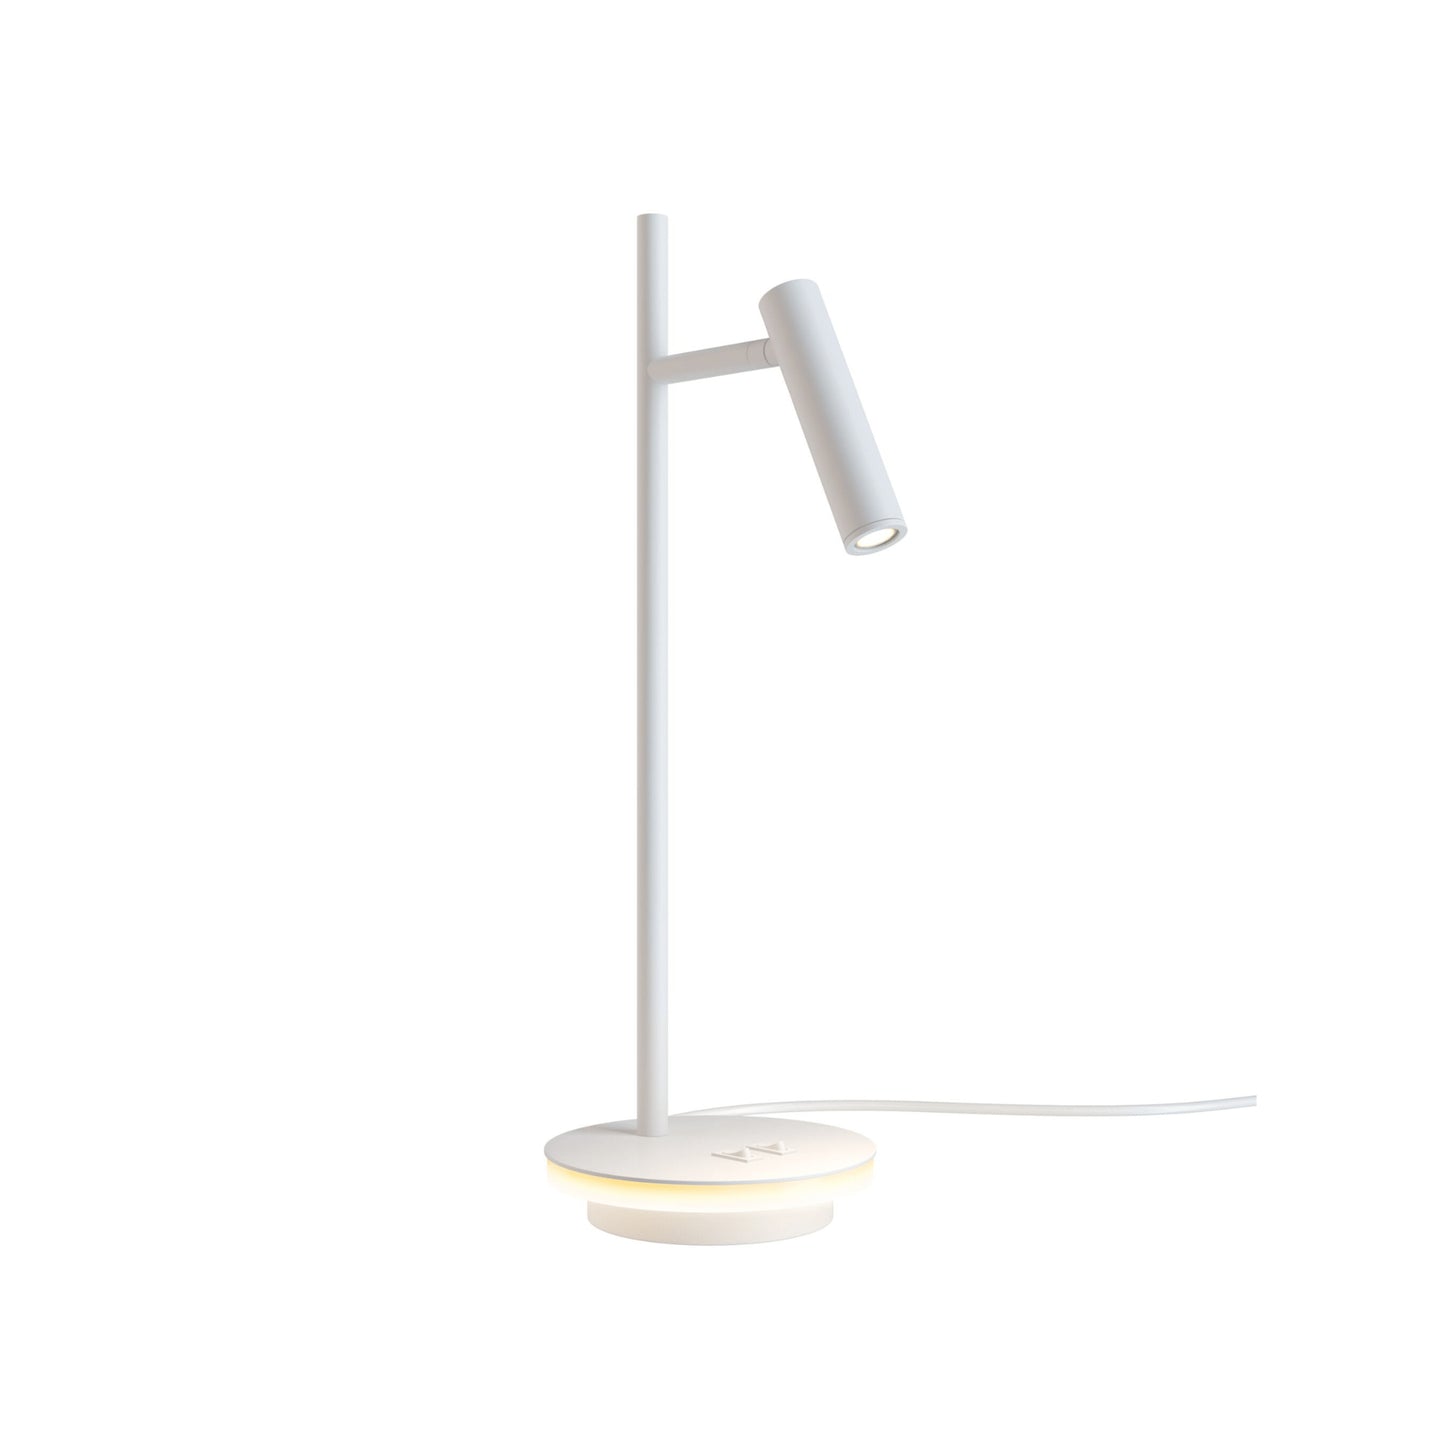 Une Lampe de Bureau Blanche minimaliste.